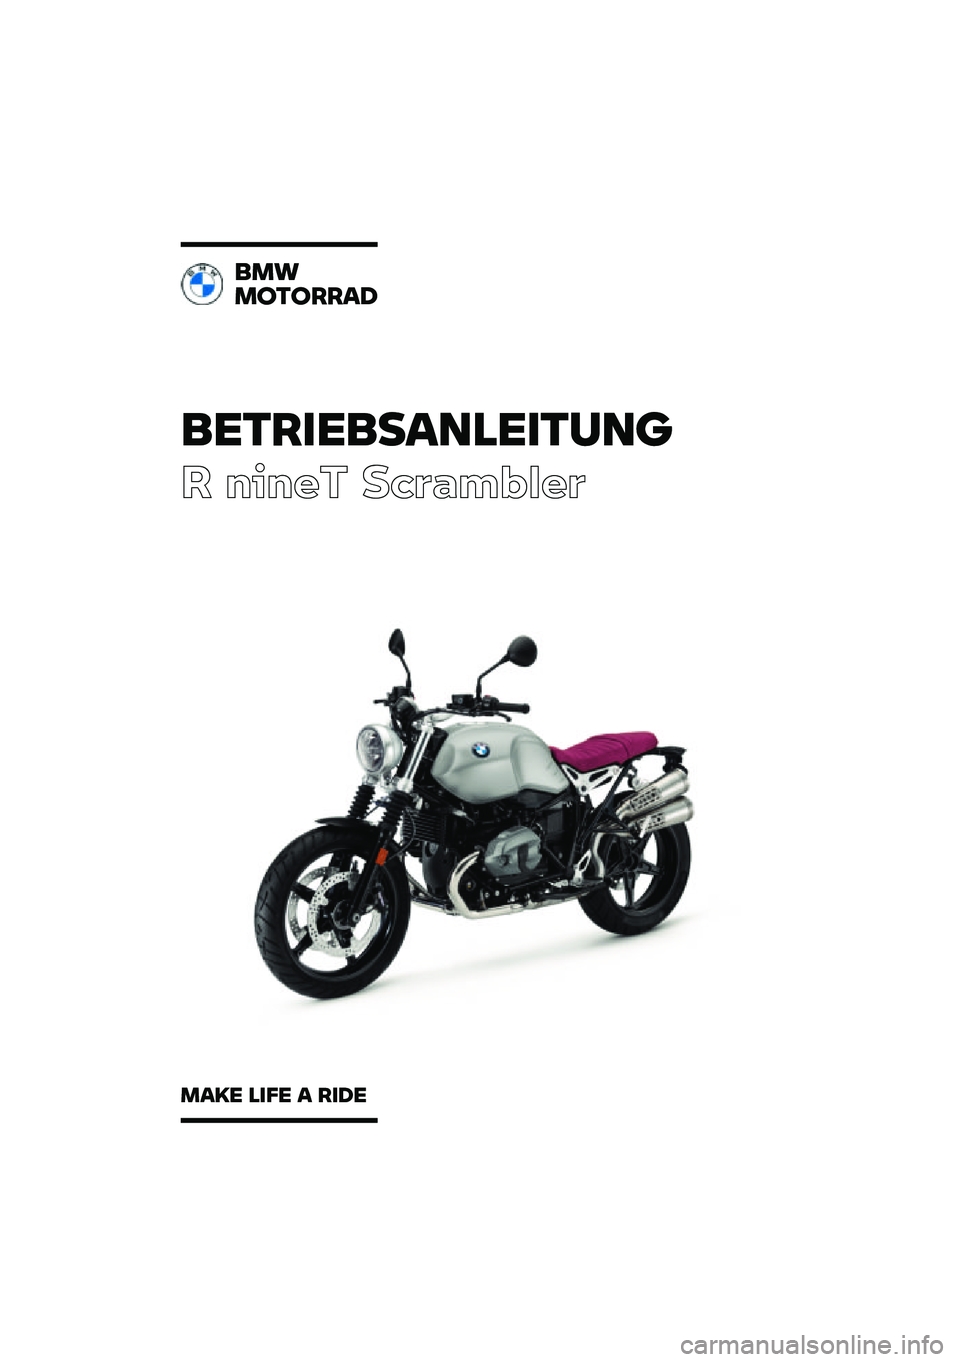 BMW MOTORRAD R NINE T SCRAMBLER 2021  Betriebsanleitung (in German) ���������\b�	�
�����	�\f
� ����� ��\b�	�
��\f�
��	
��
�
�
������\b�
�
�\b�� �
��� �\b ���� 